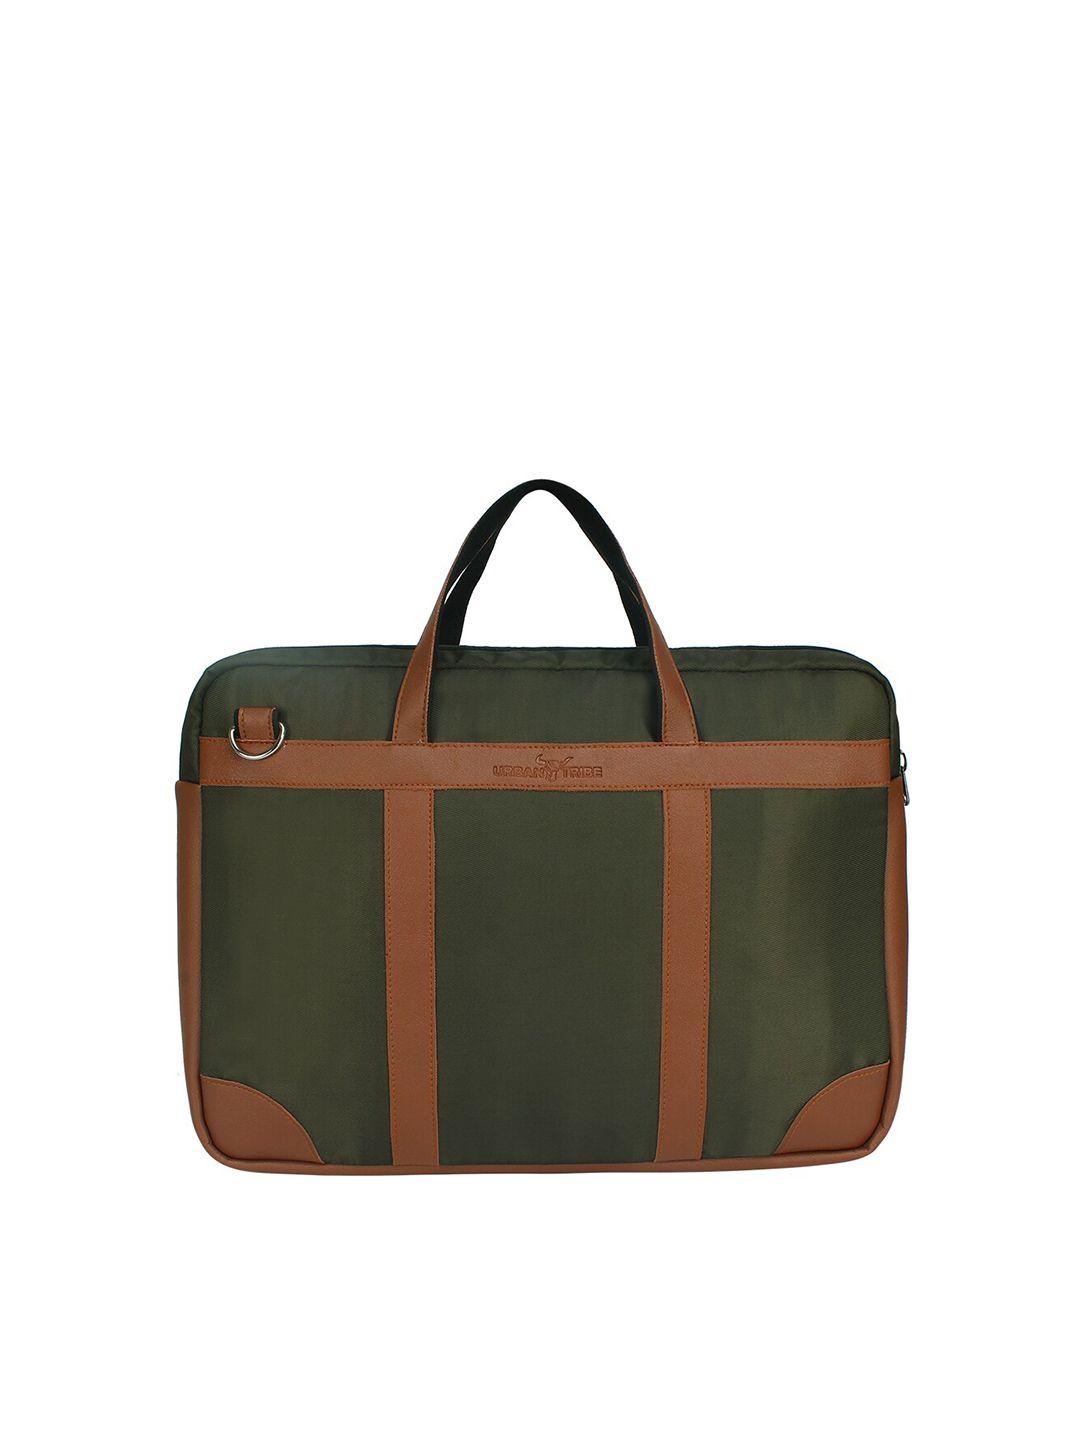 urban tribe unisex olive green & brown colourblocked laptop bag